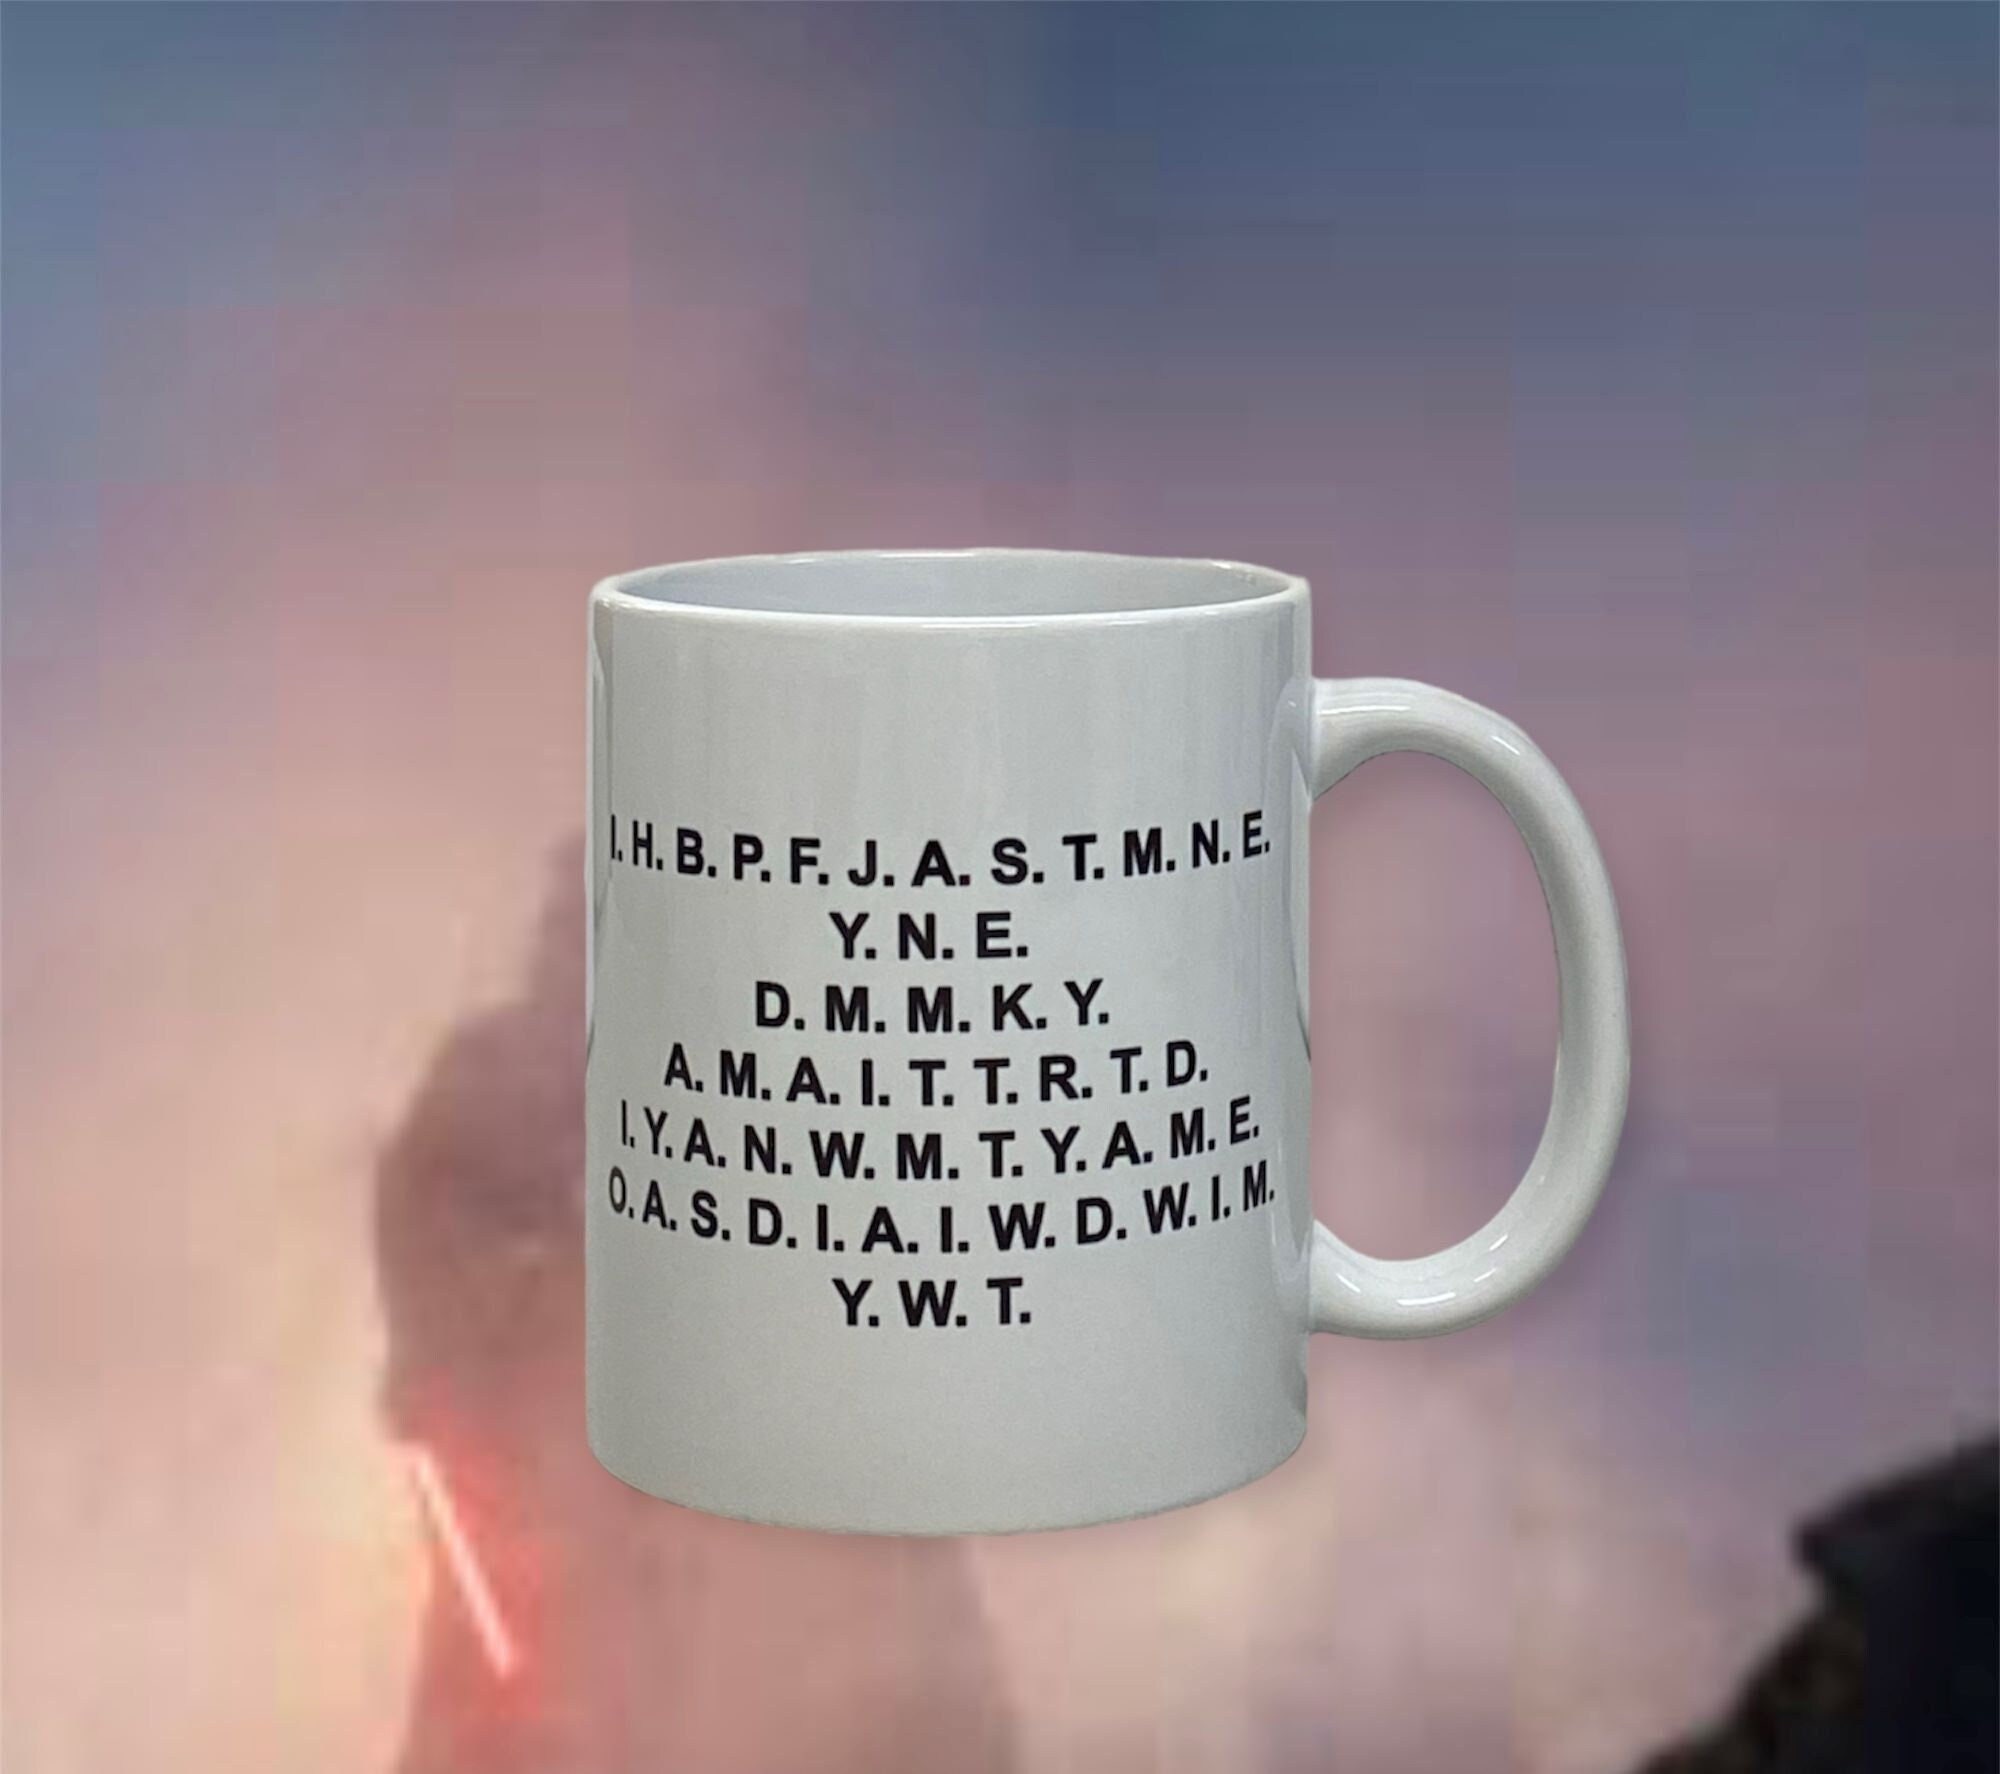 Star Wars Darth Vader Ceramic Mug in Presentation Gift Box (Dark Side  Coffee Design) 11oz Ceramic Mug - Official Merchandise